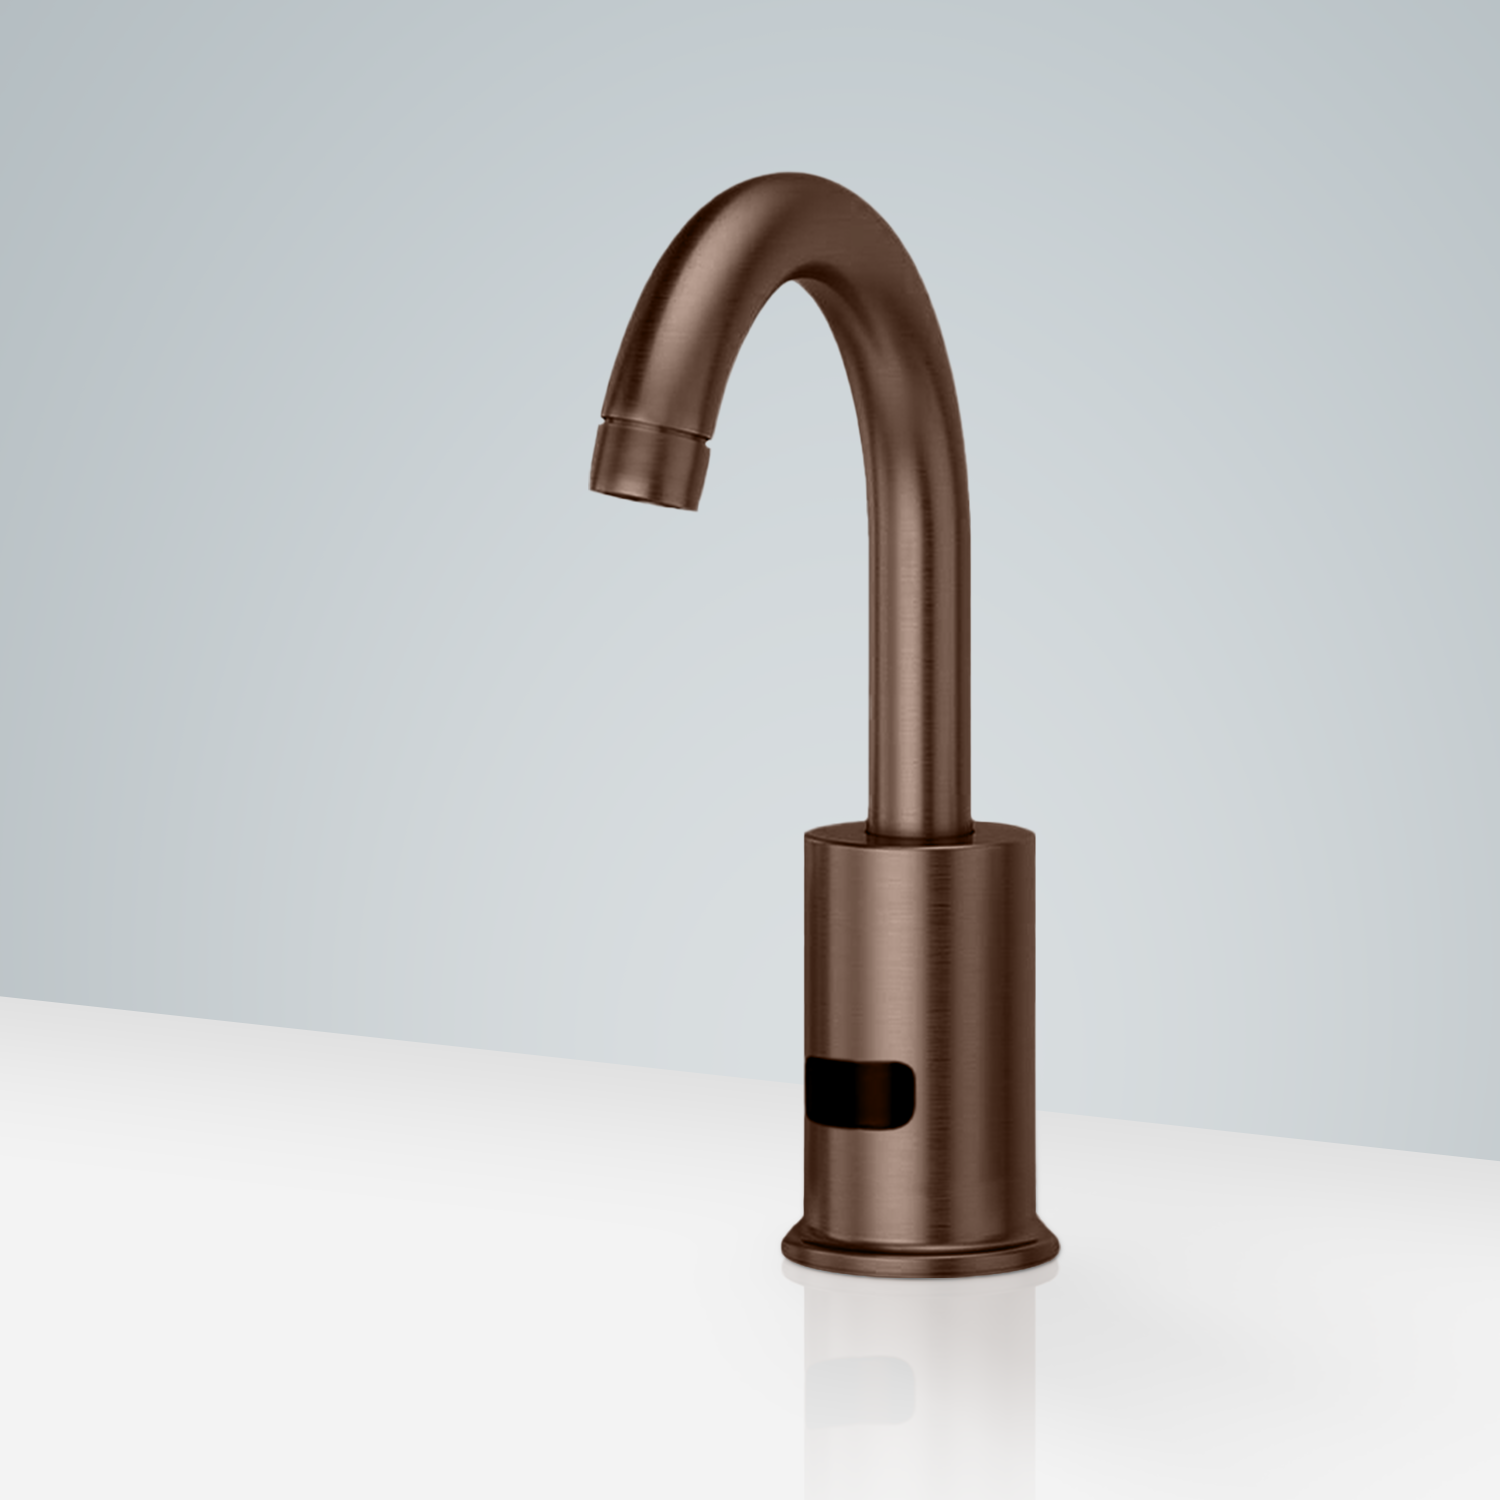 Fontana Commercial Light Oil Rubbed Bronze Touchless Automatic Sensor Faucet